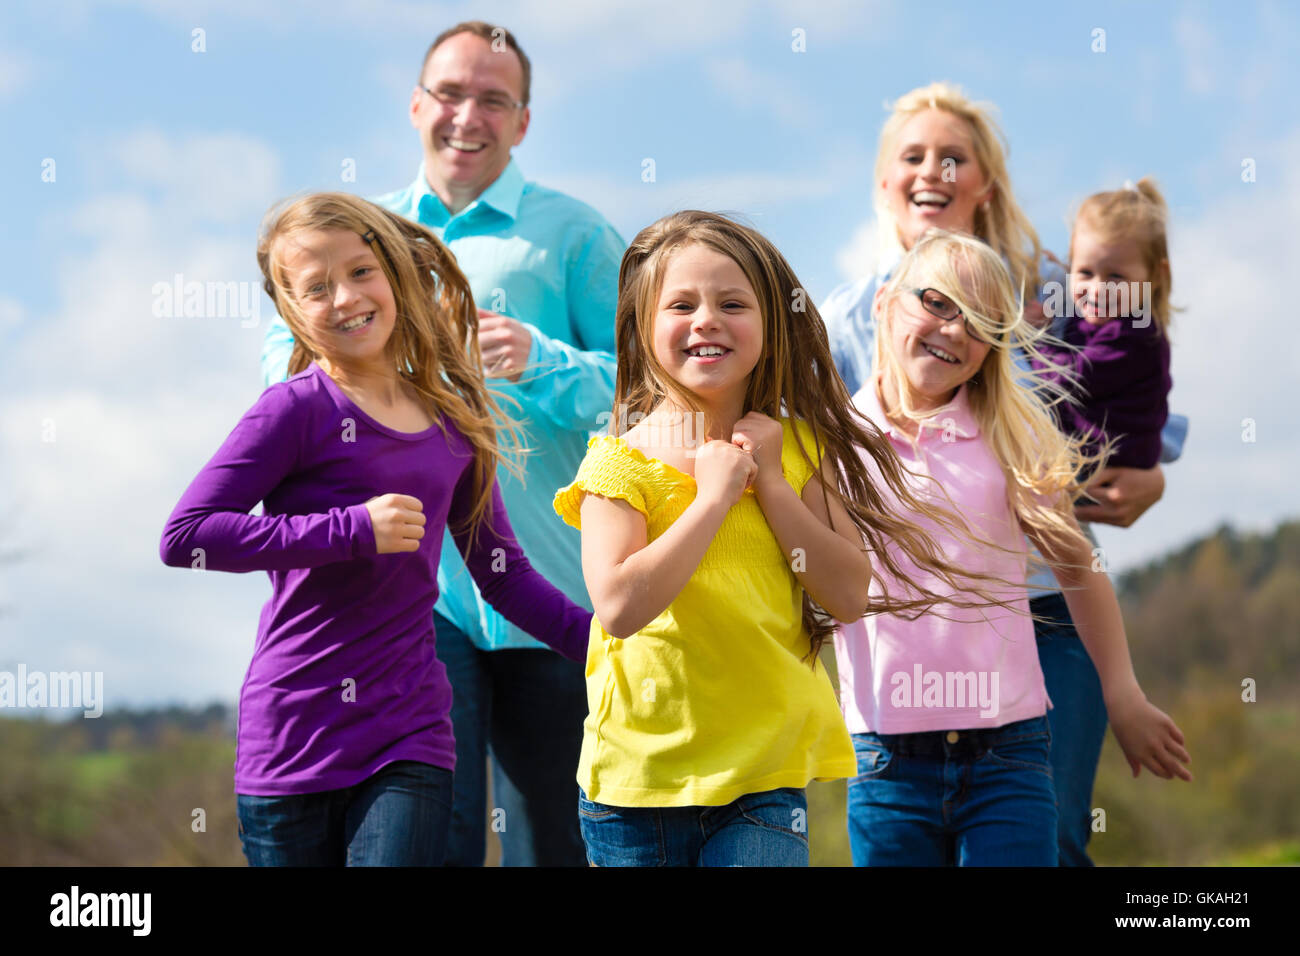 family jogging outdoors Stock Photo